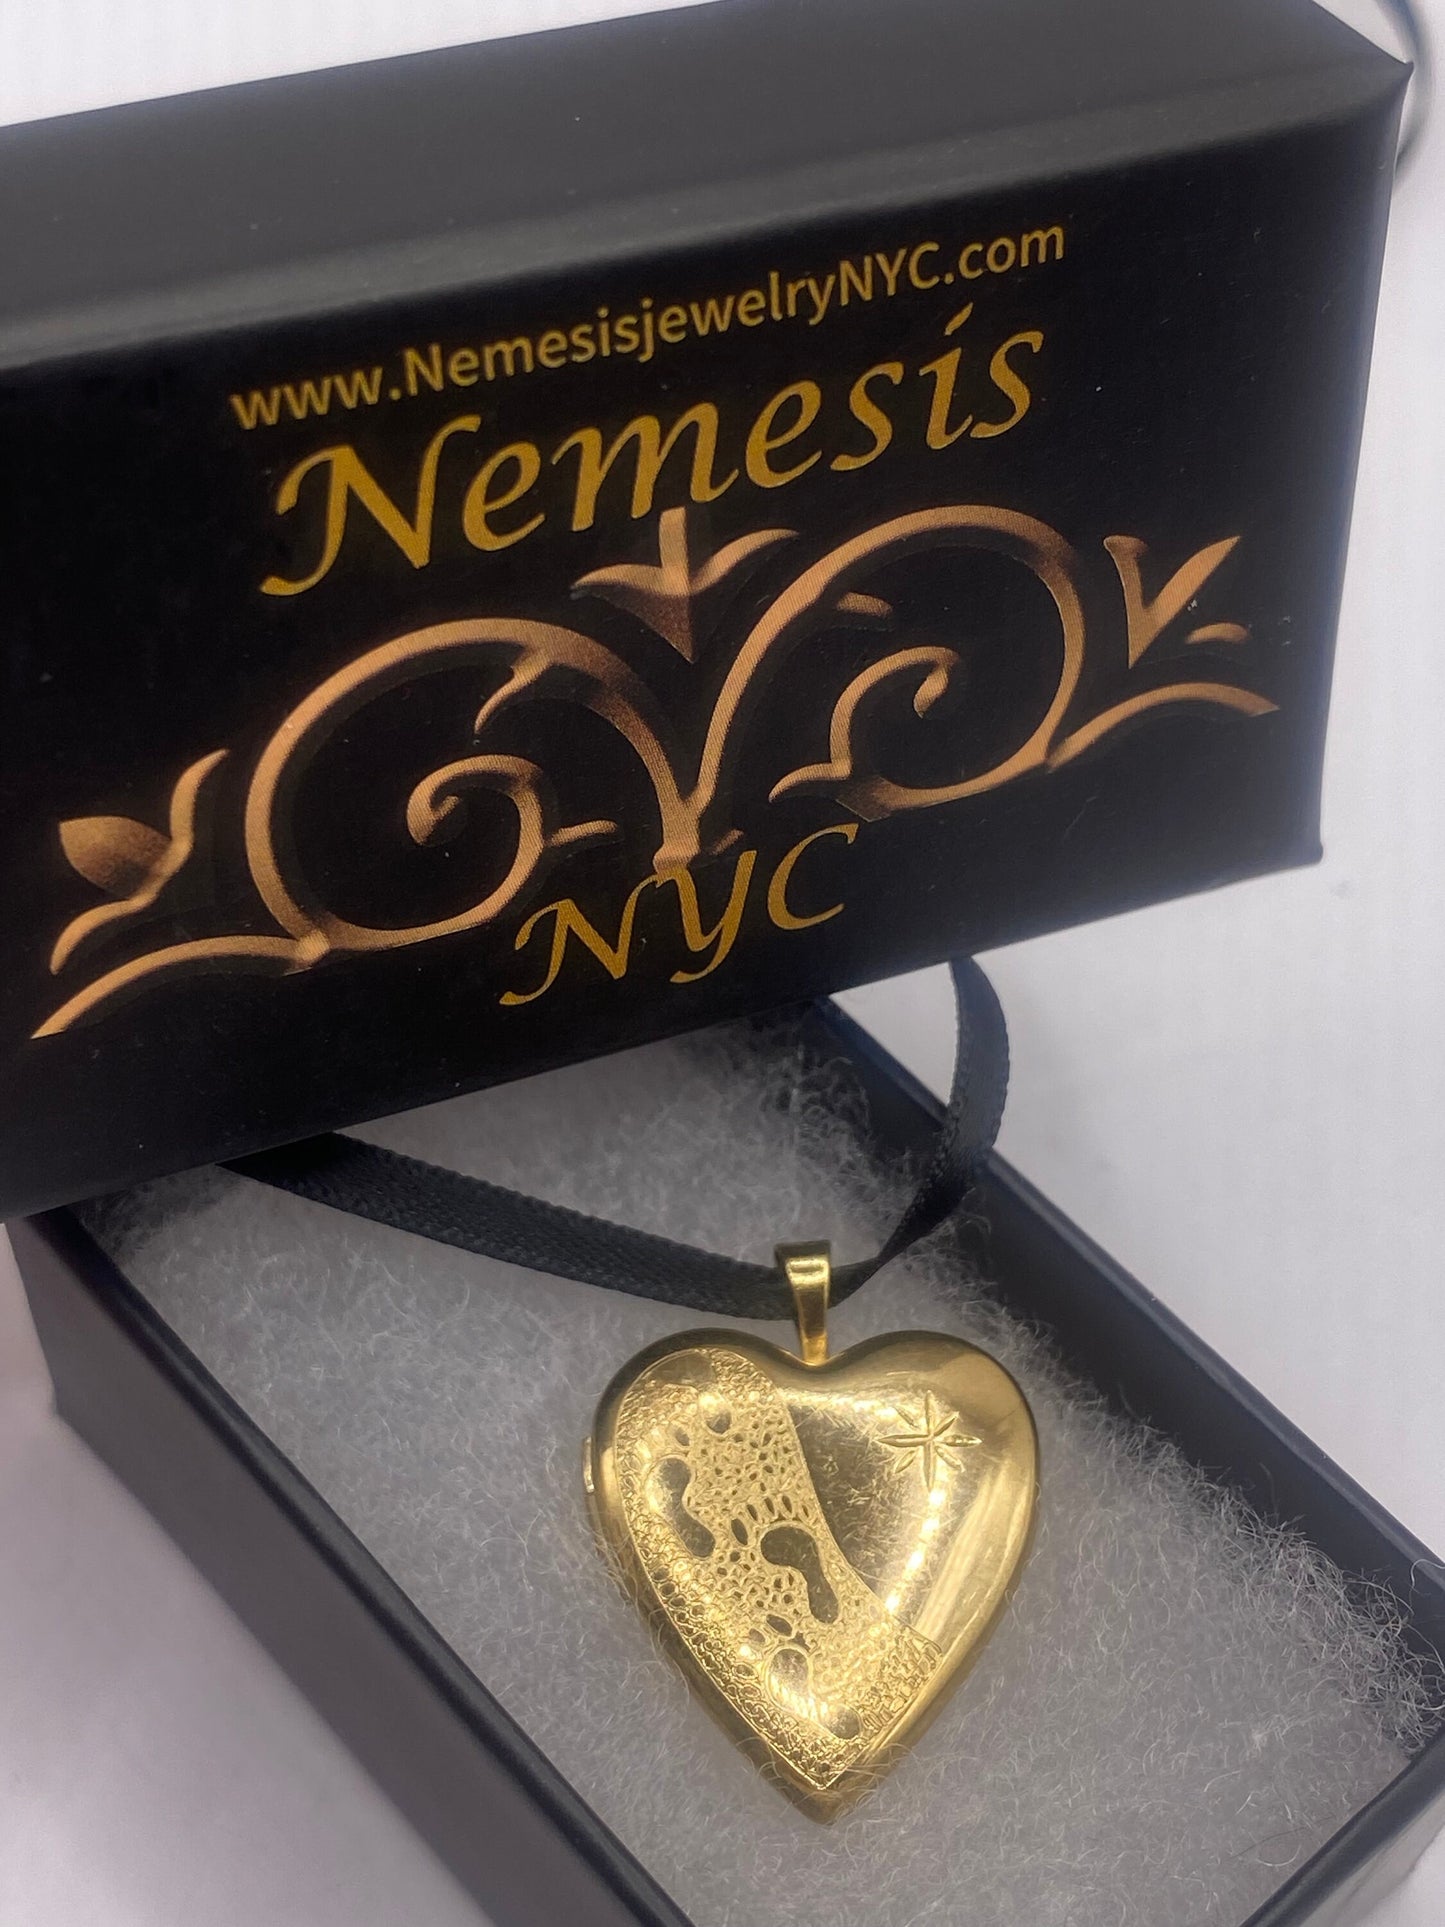 Vintage Gold Locket | Tiny Heart 9k Gold Filled Pendant Photo Memory Charm Engraved Footsteps | Choker Necklace